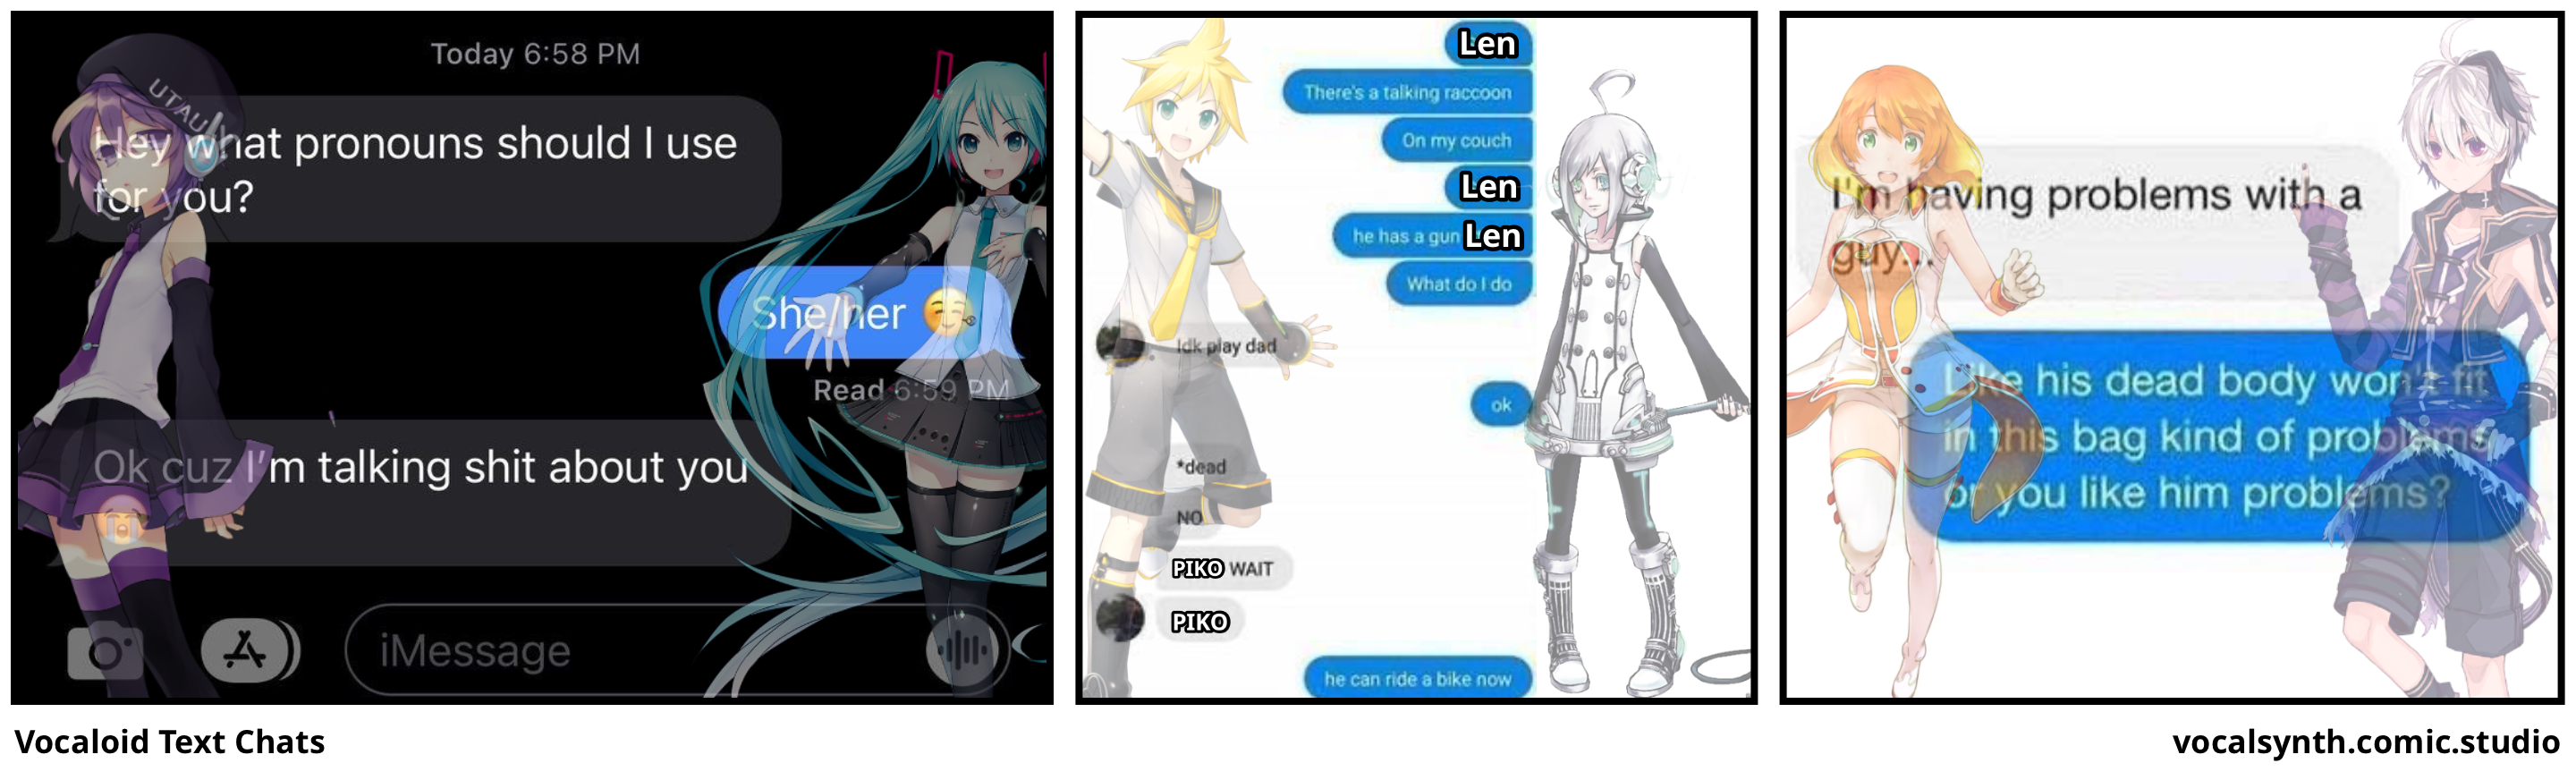 Vocaloid Text Chats